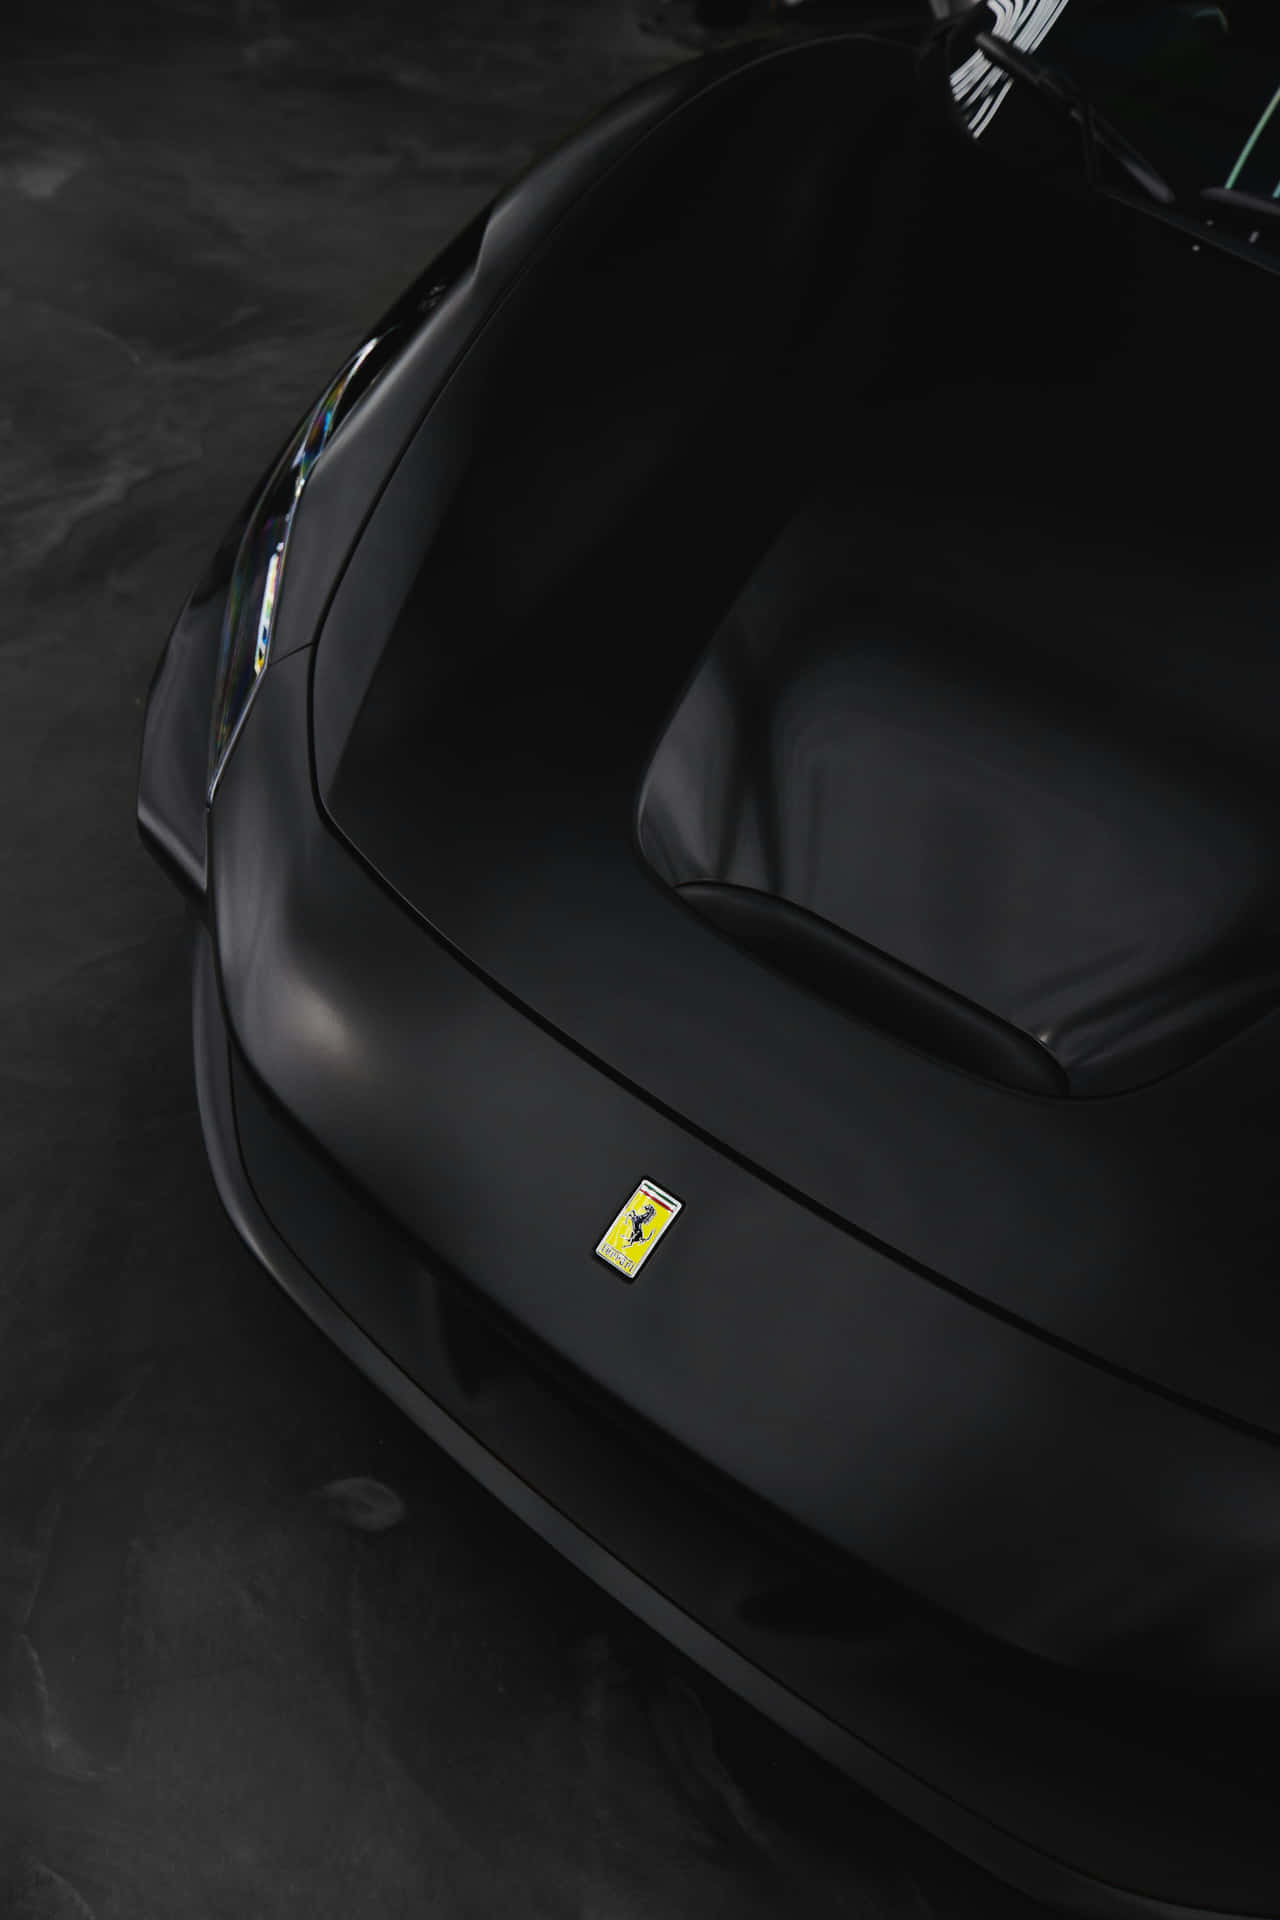 Black Ferrari Front View P F P Wallpaper